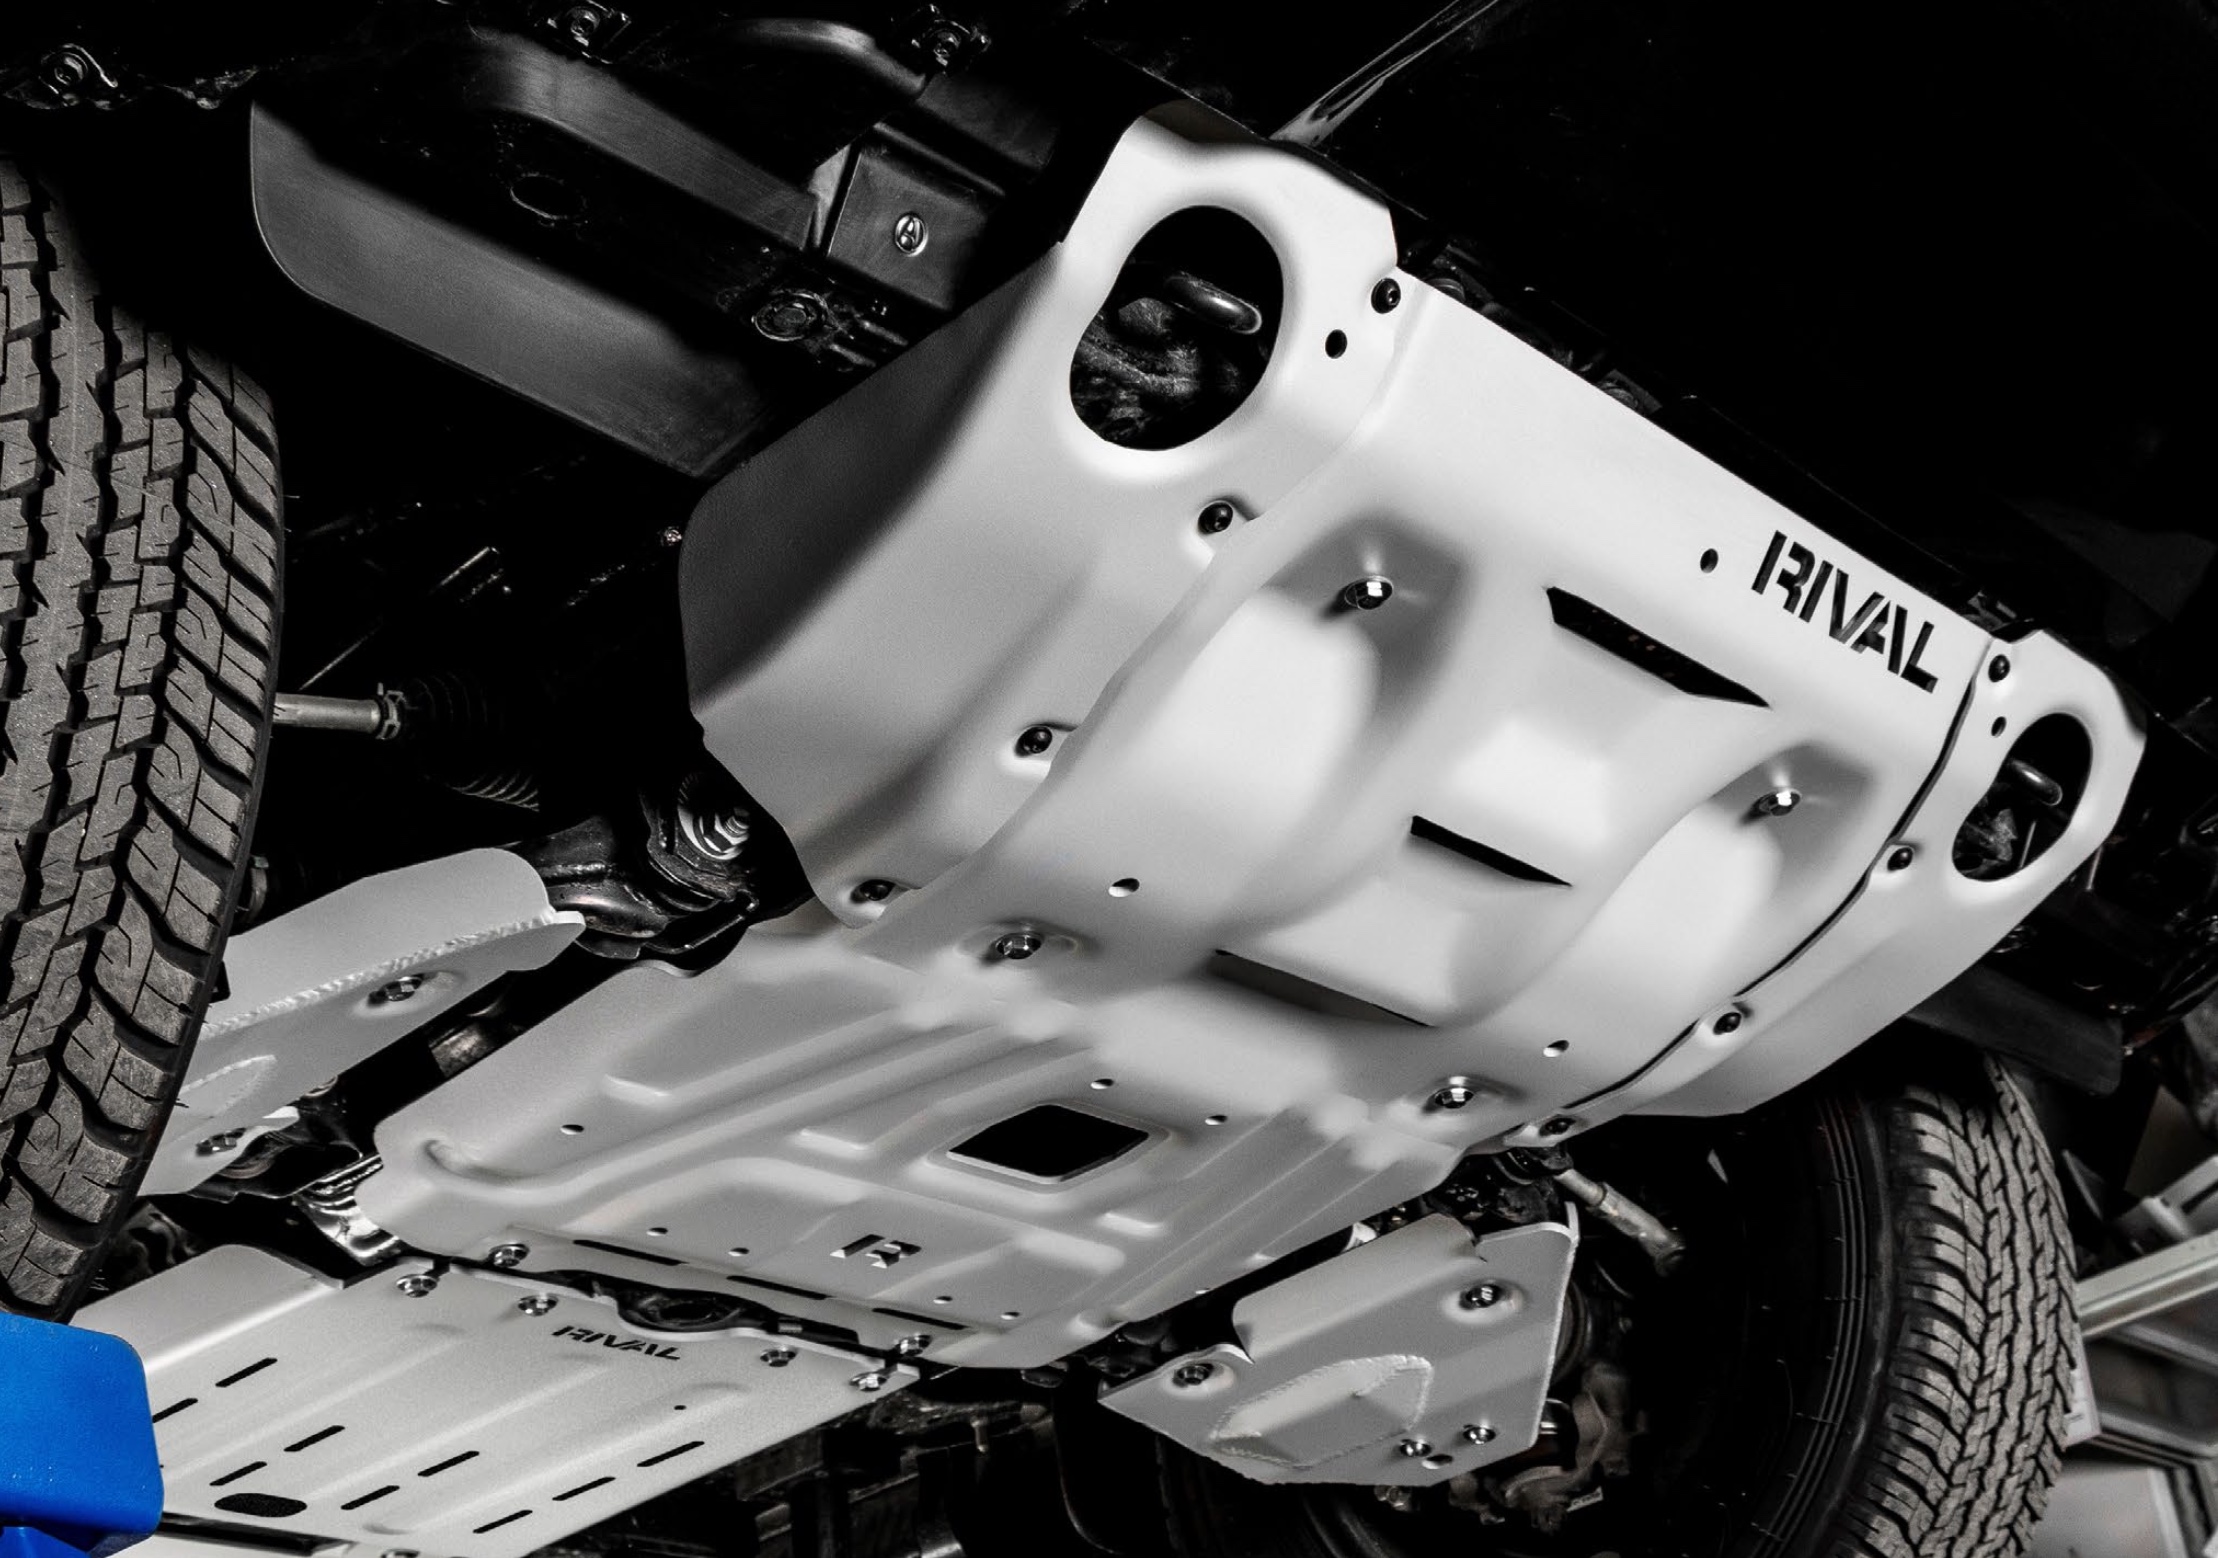 2025 Toyota 4runner RIVAL Aluminum Skid Plates for 2025 4Runner 6th Gen... stay tuned Image 4-8-24 at 9.33 AM.JPG